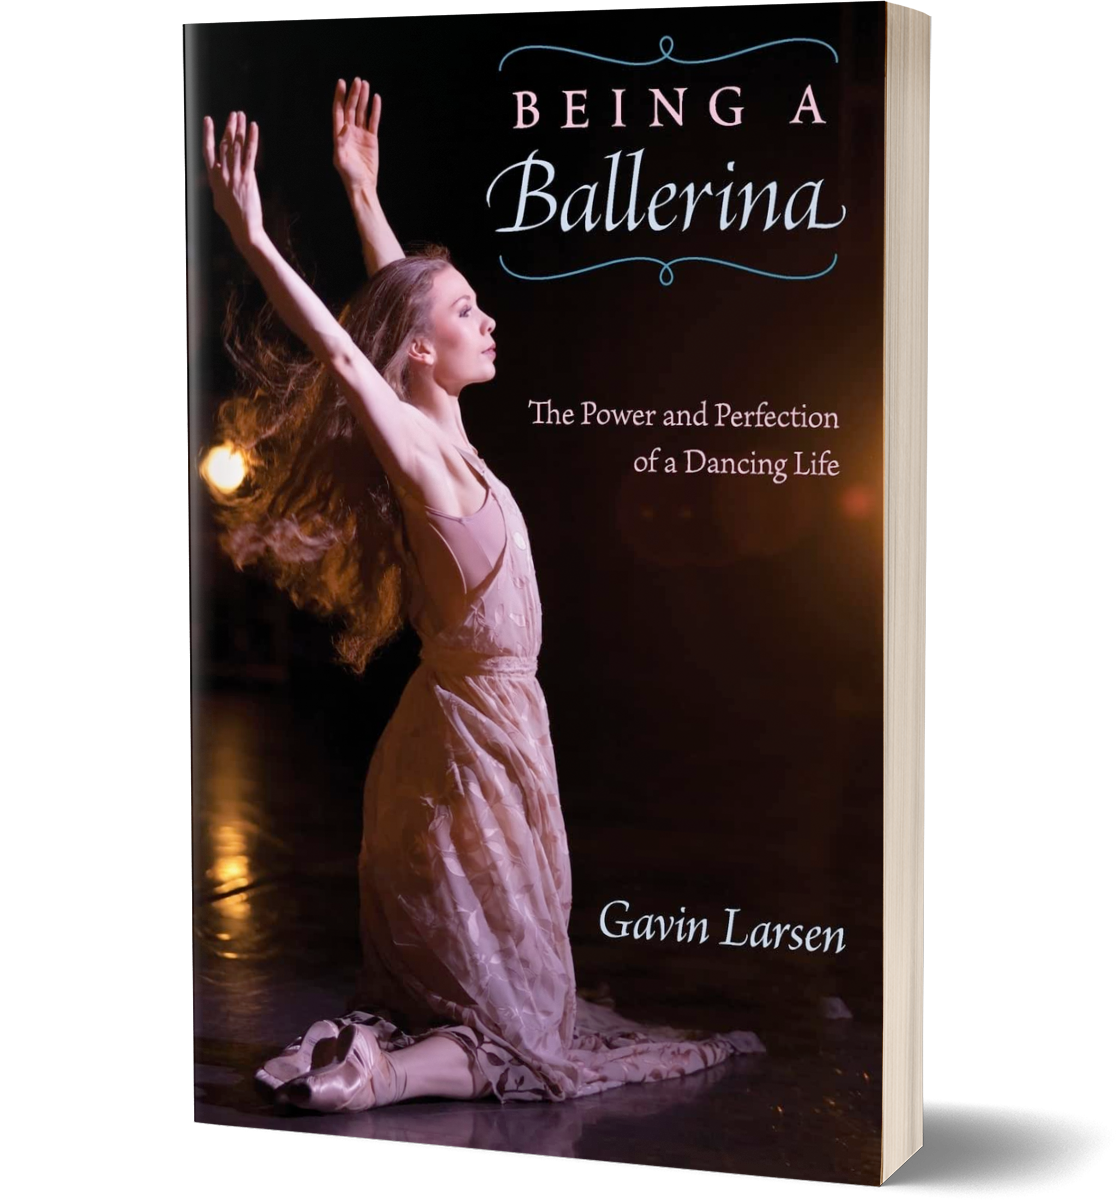 Being a Ballerina by Gavin Larsen